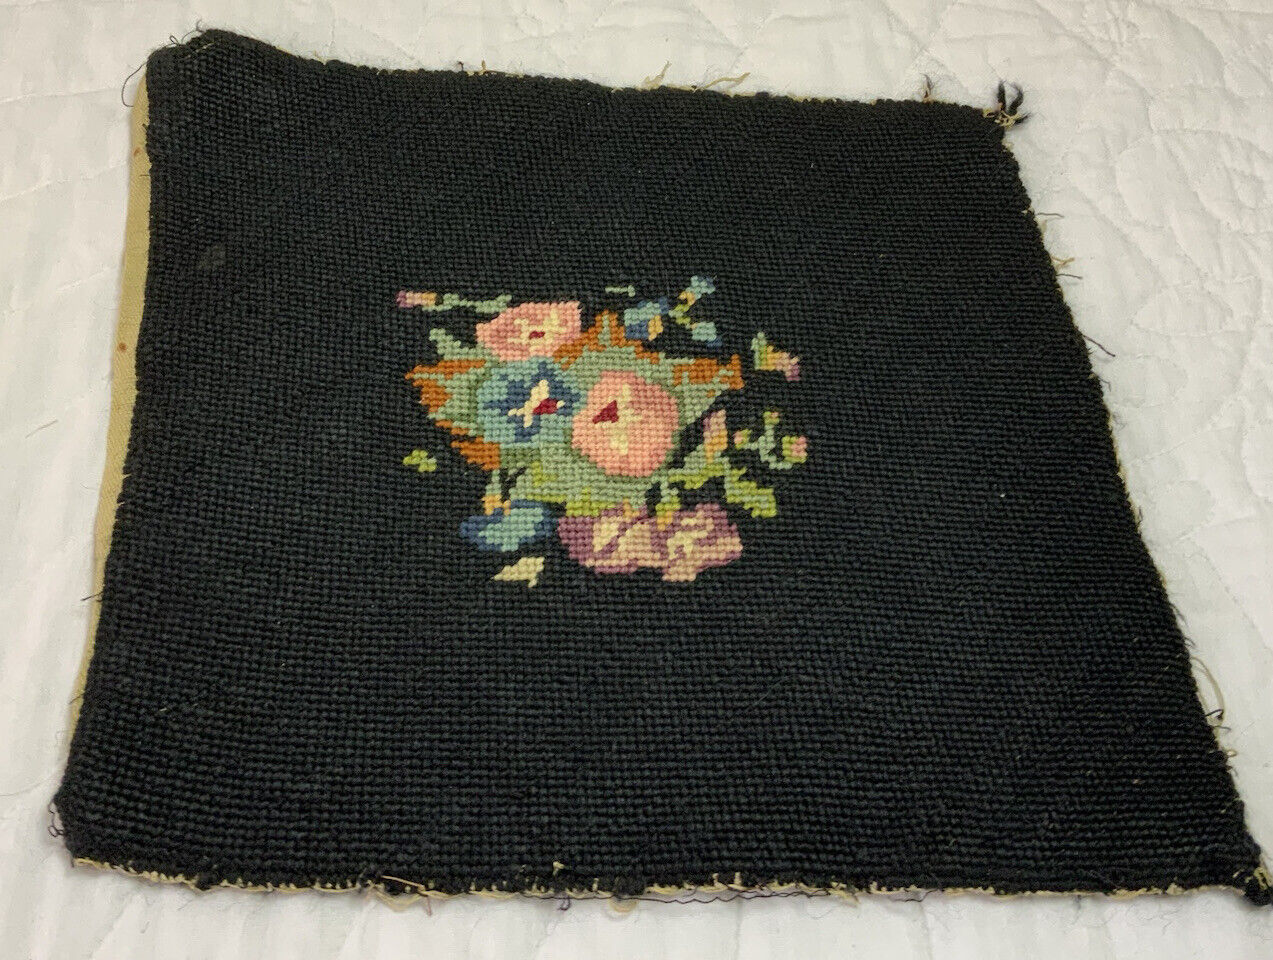 Vintage Antique Needlepoint Embroidery, Floral Design, Black, Multi, Wool